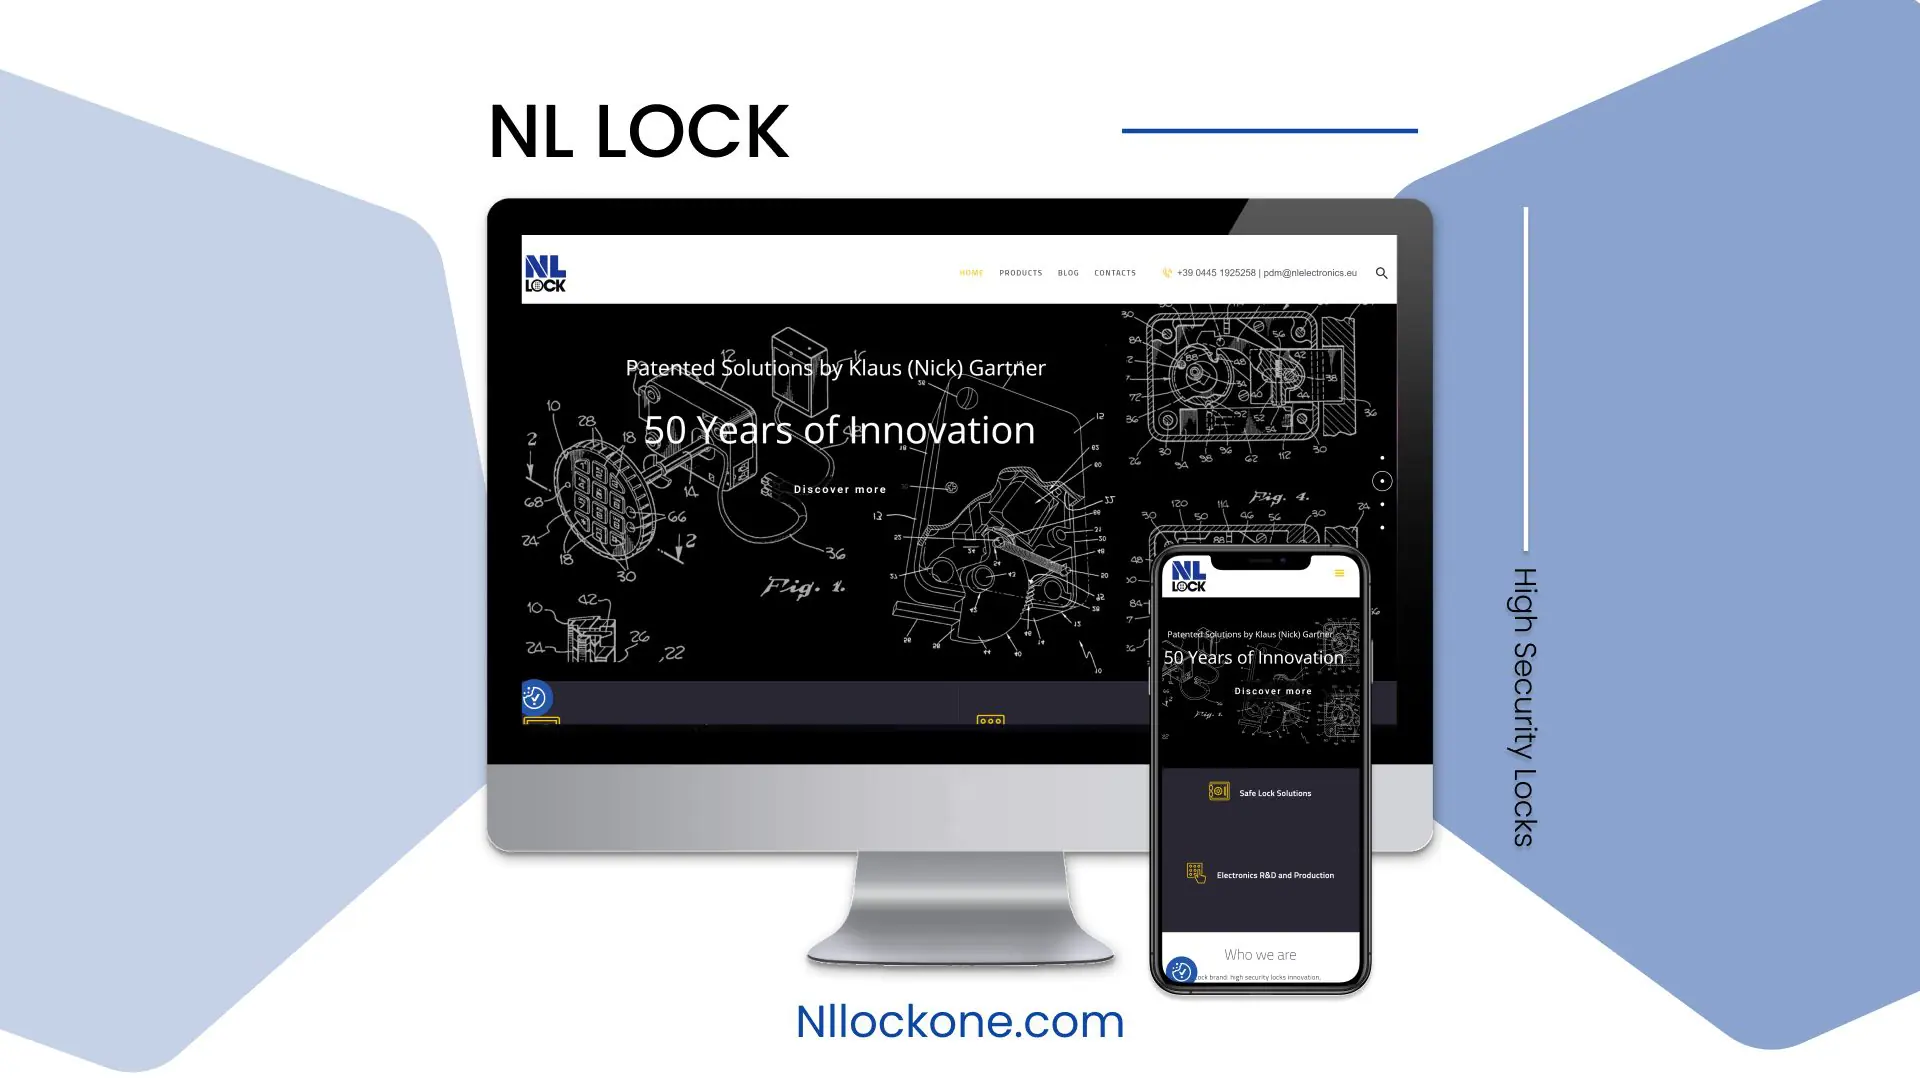 NL Lock